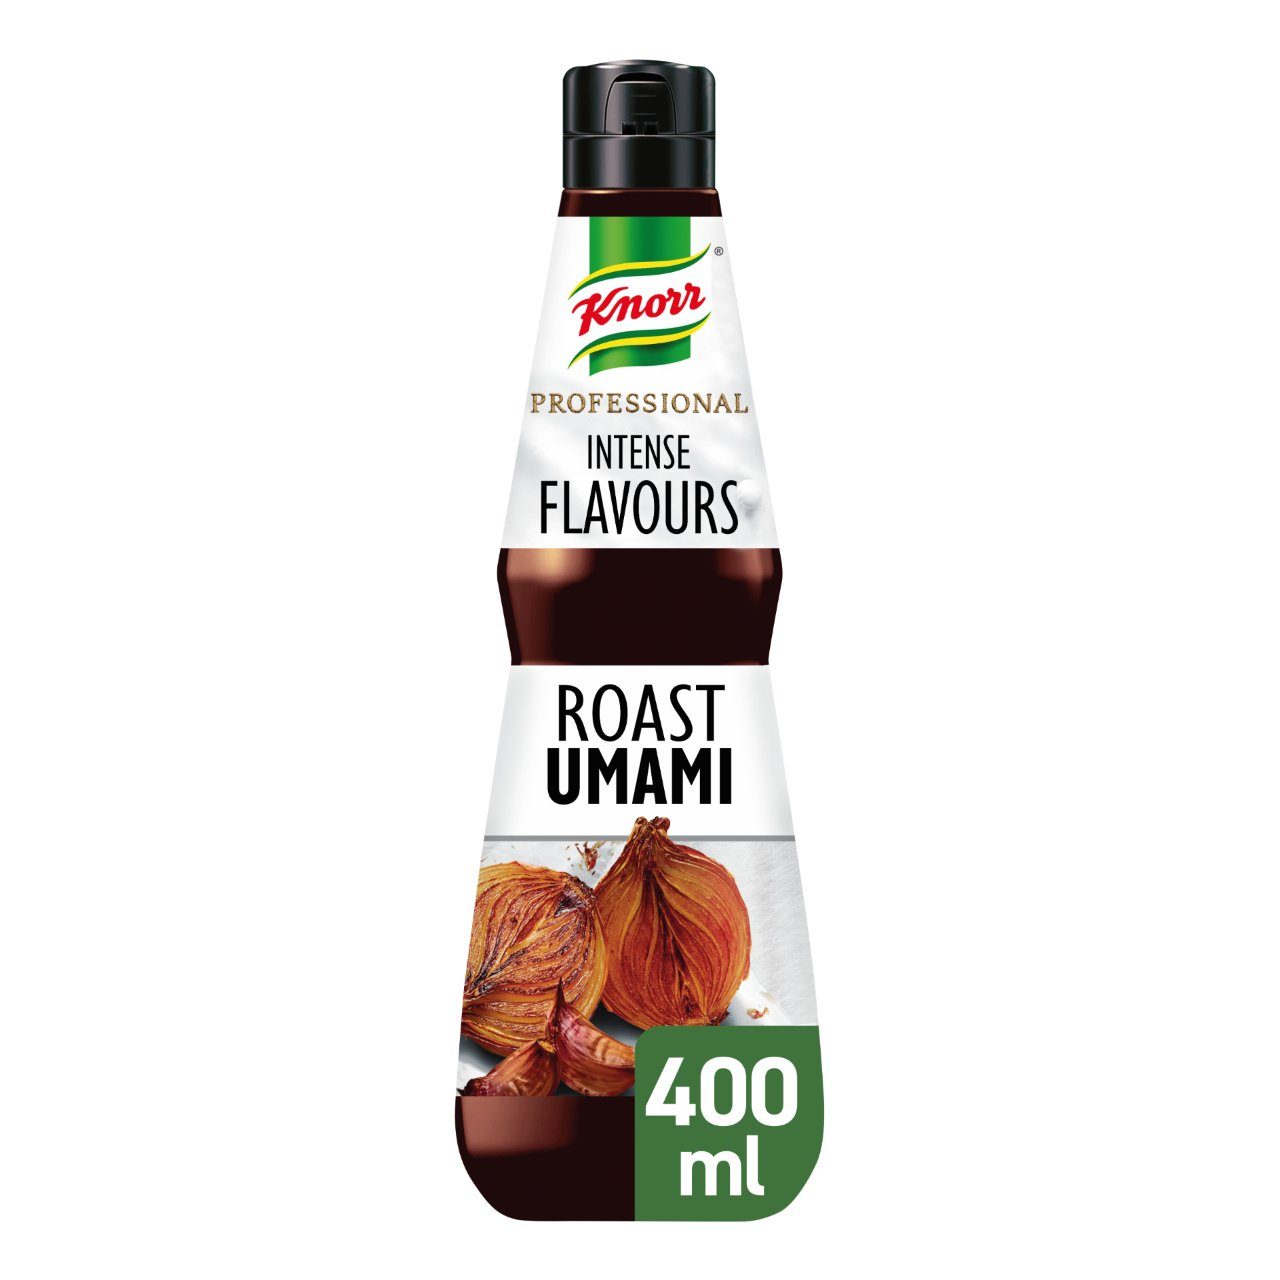 Intense flavour roast umami